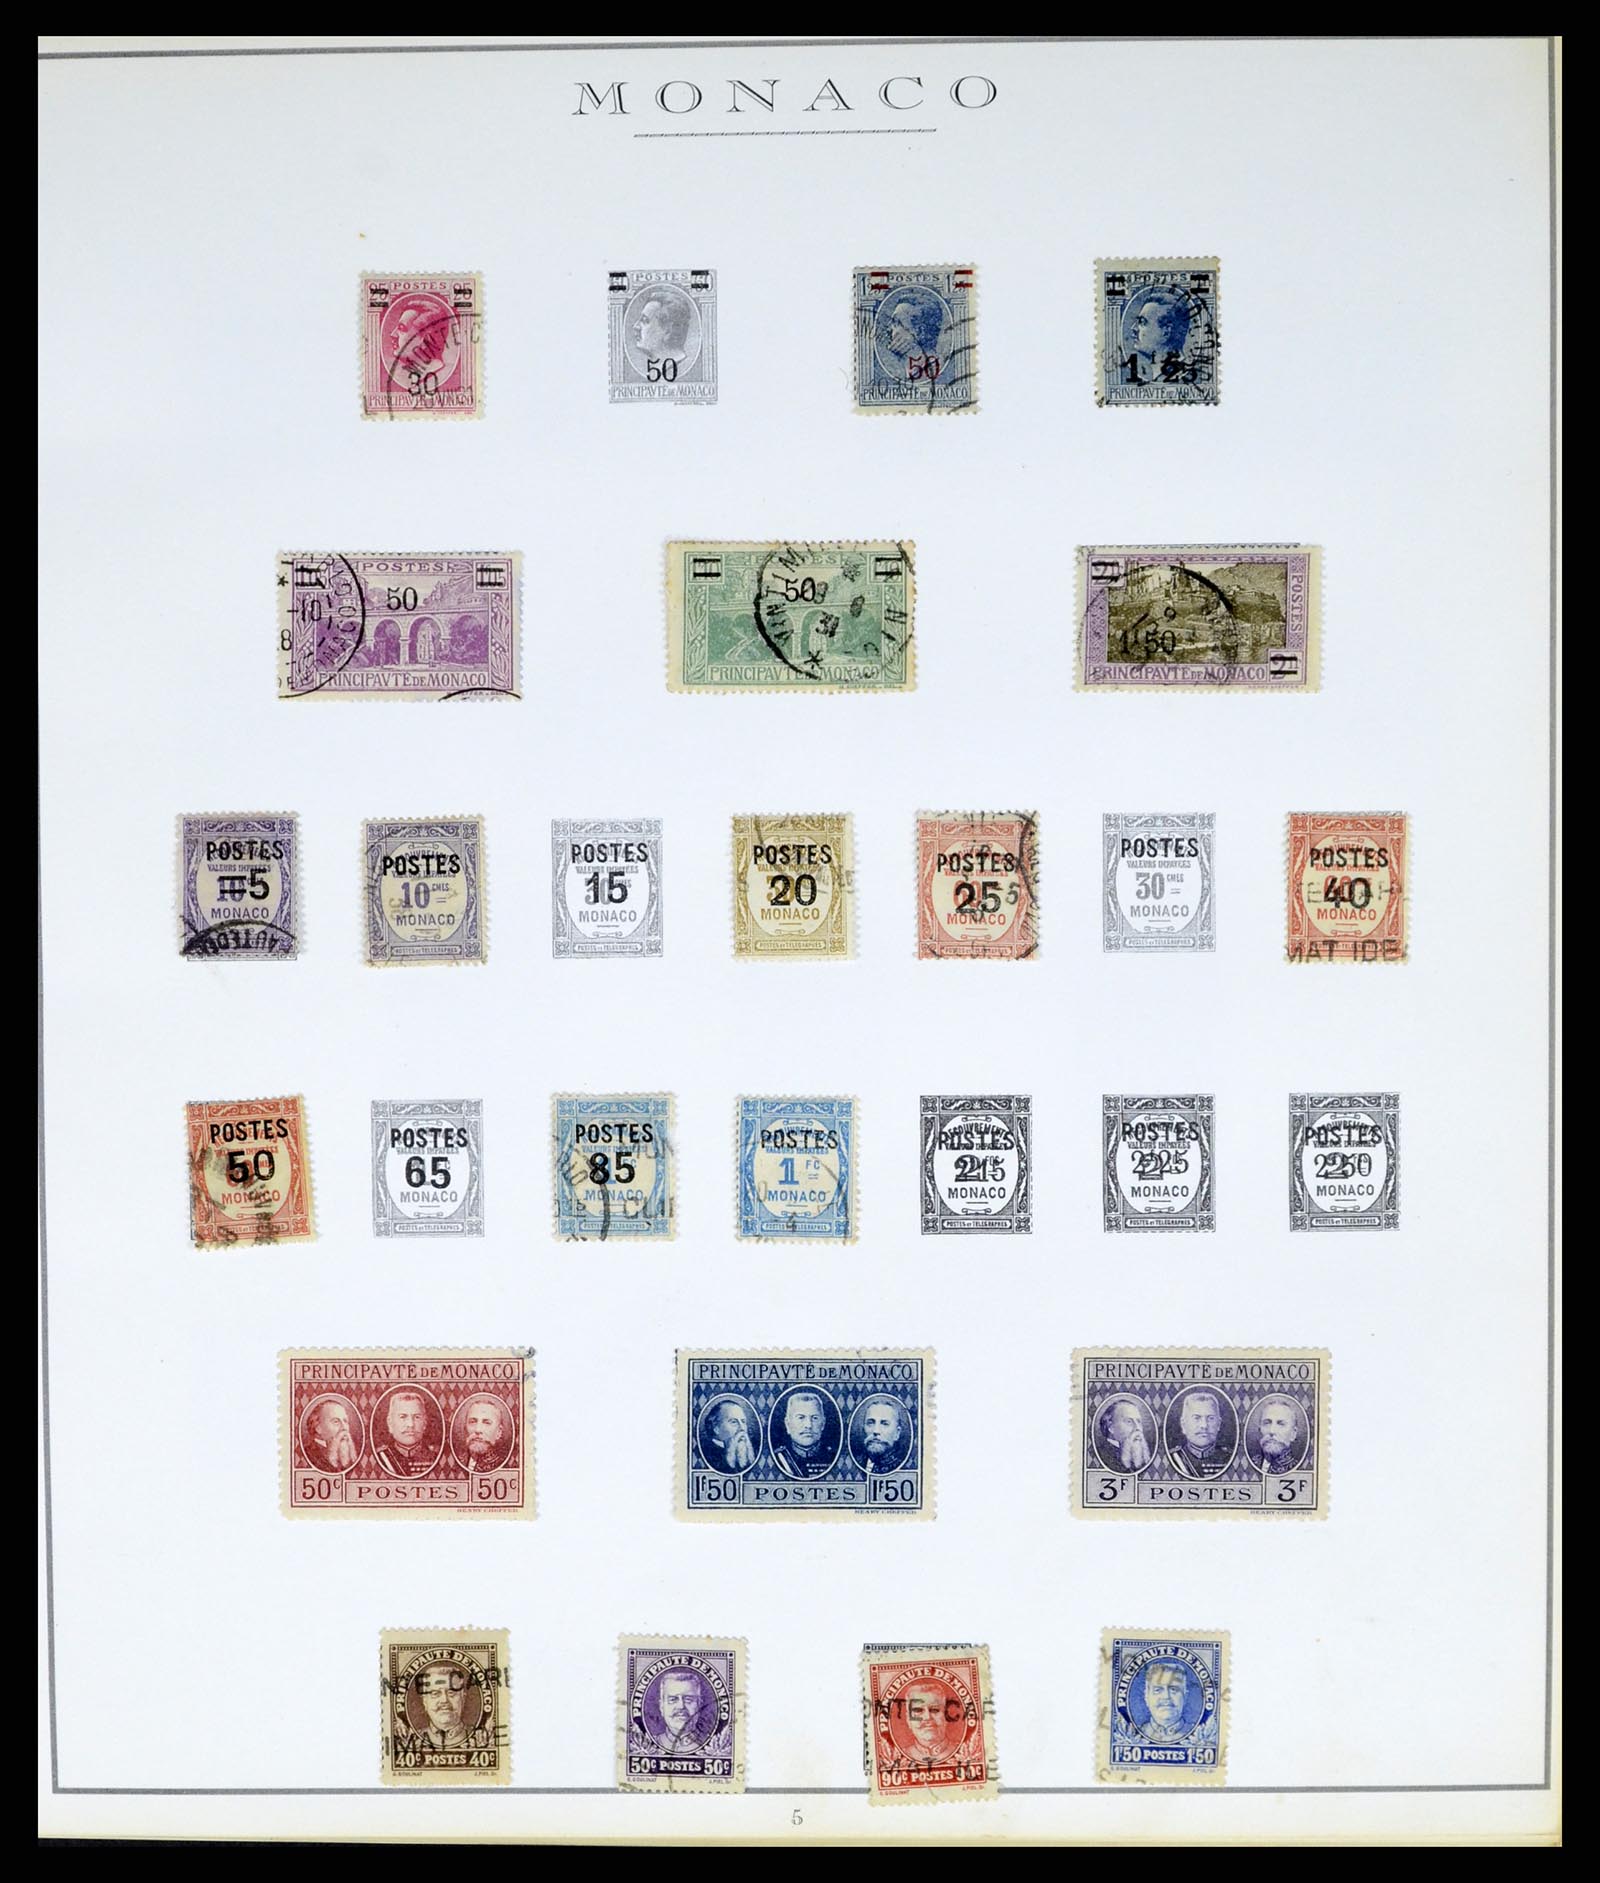 37437 010 - Stamp collection 37437 Monaco 1885-1996.